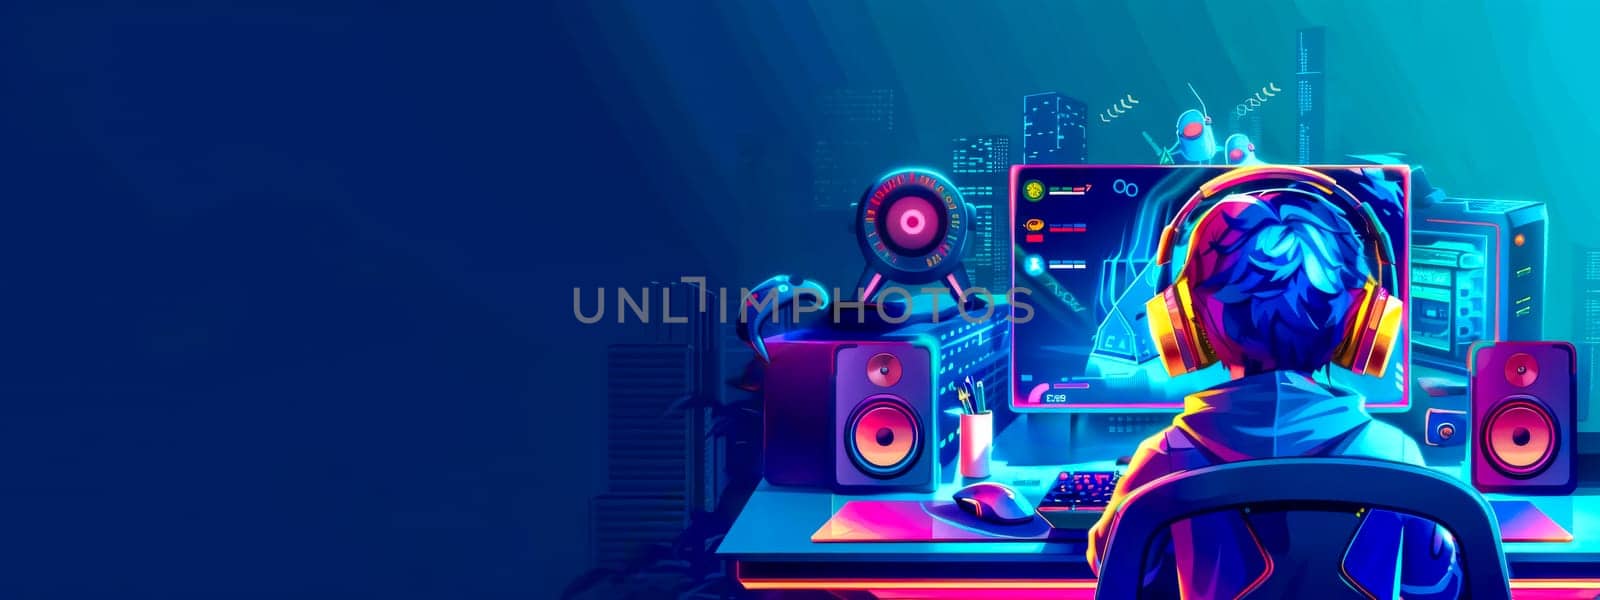 Digital art of a music producer working in a vibrant cyberpunk studio setup